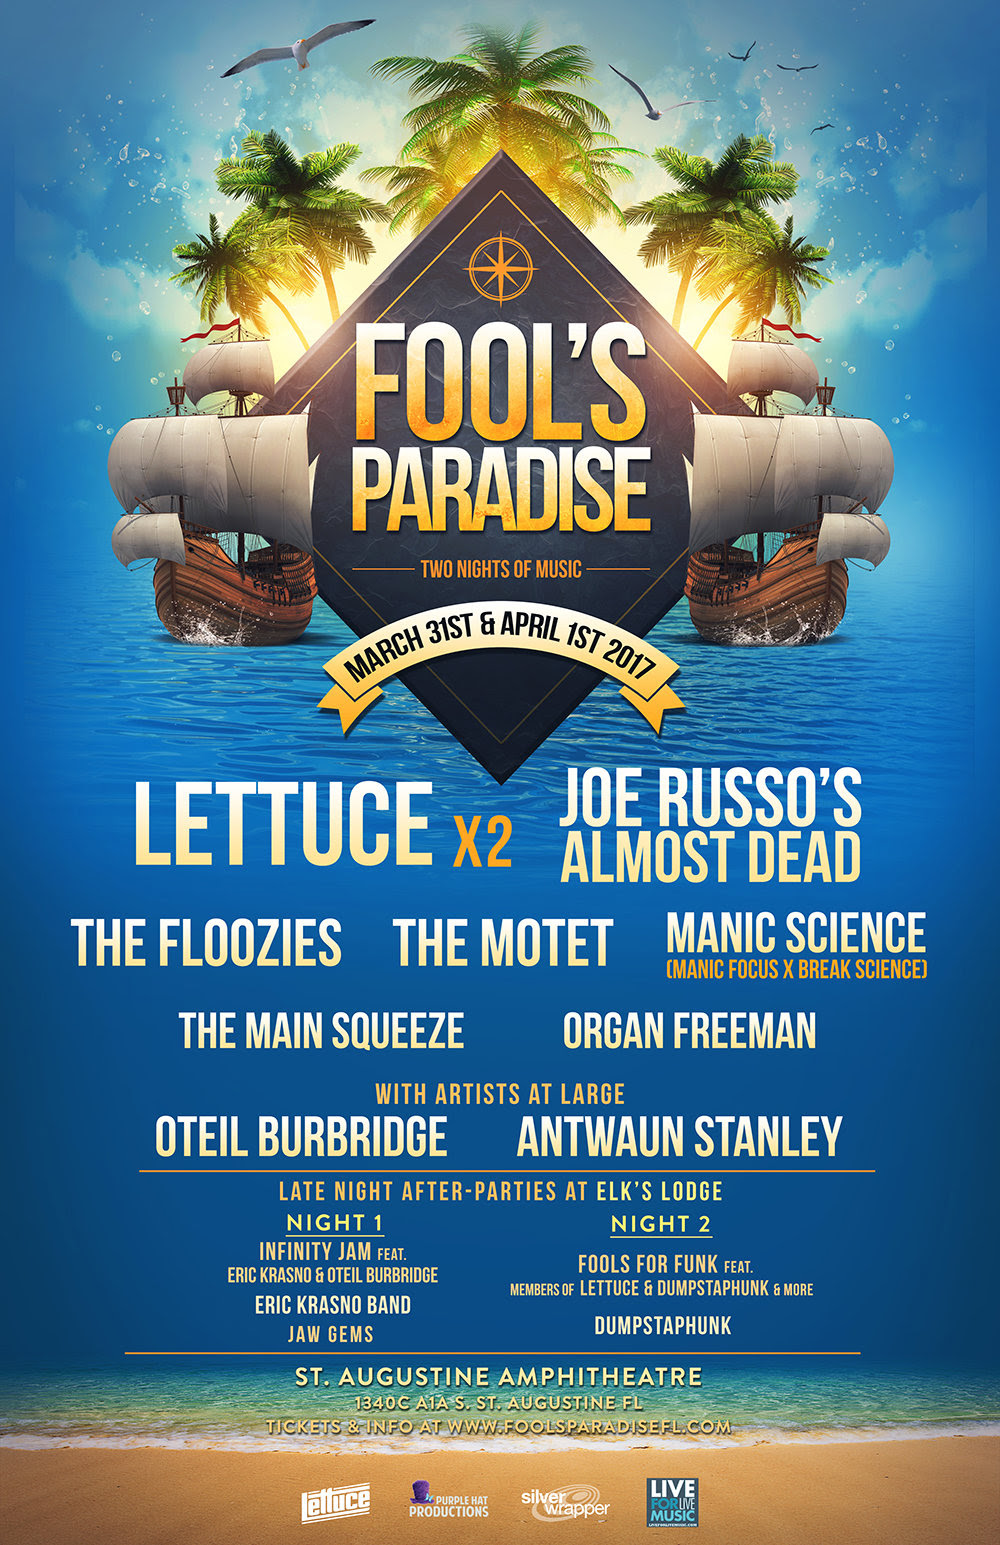 Fool's Paradise 2017 lineup. Photo provided.